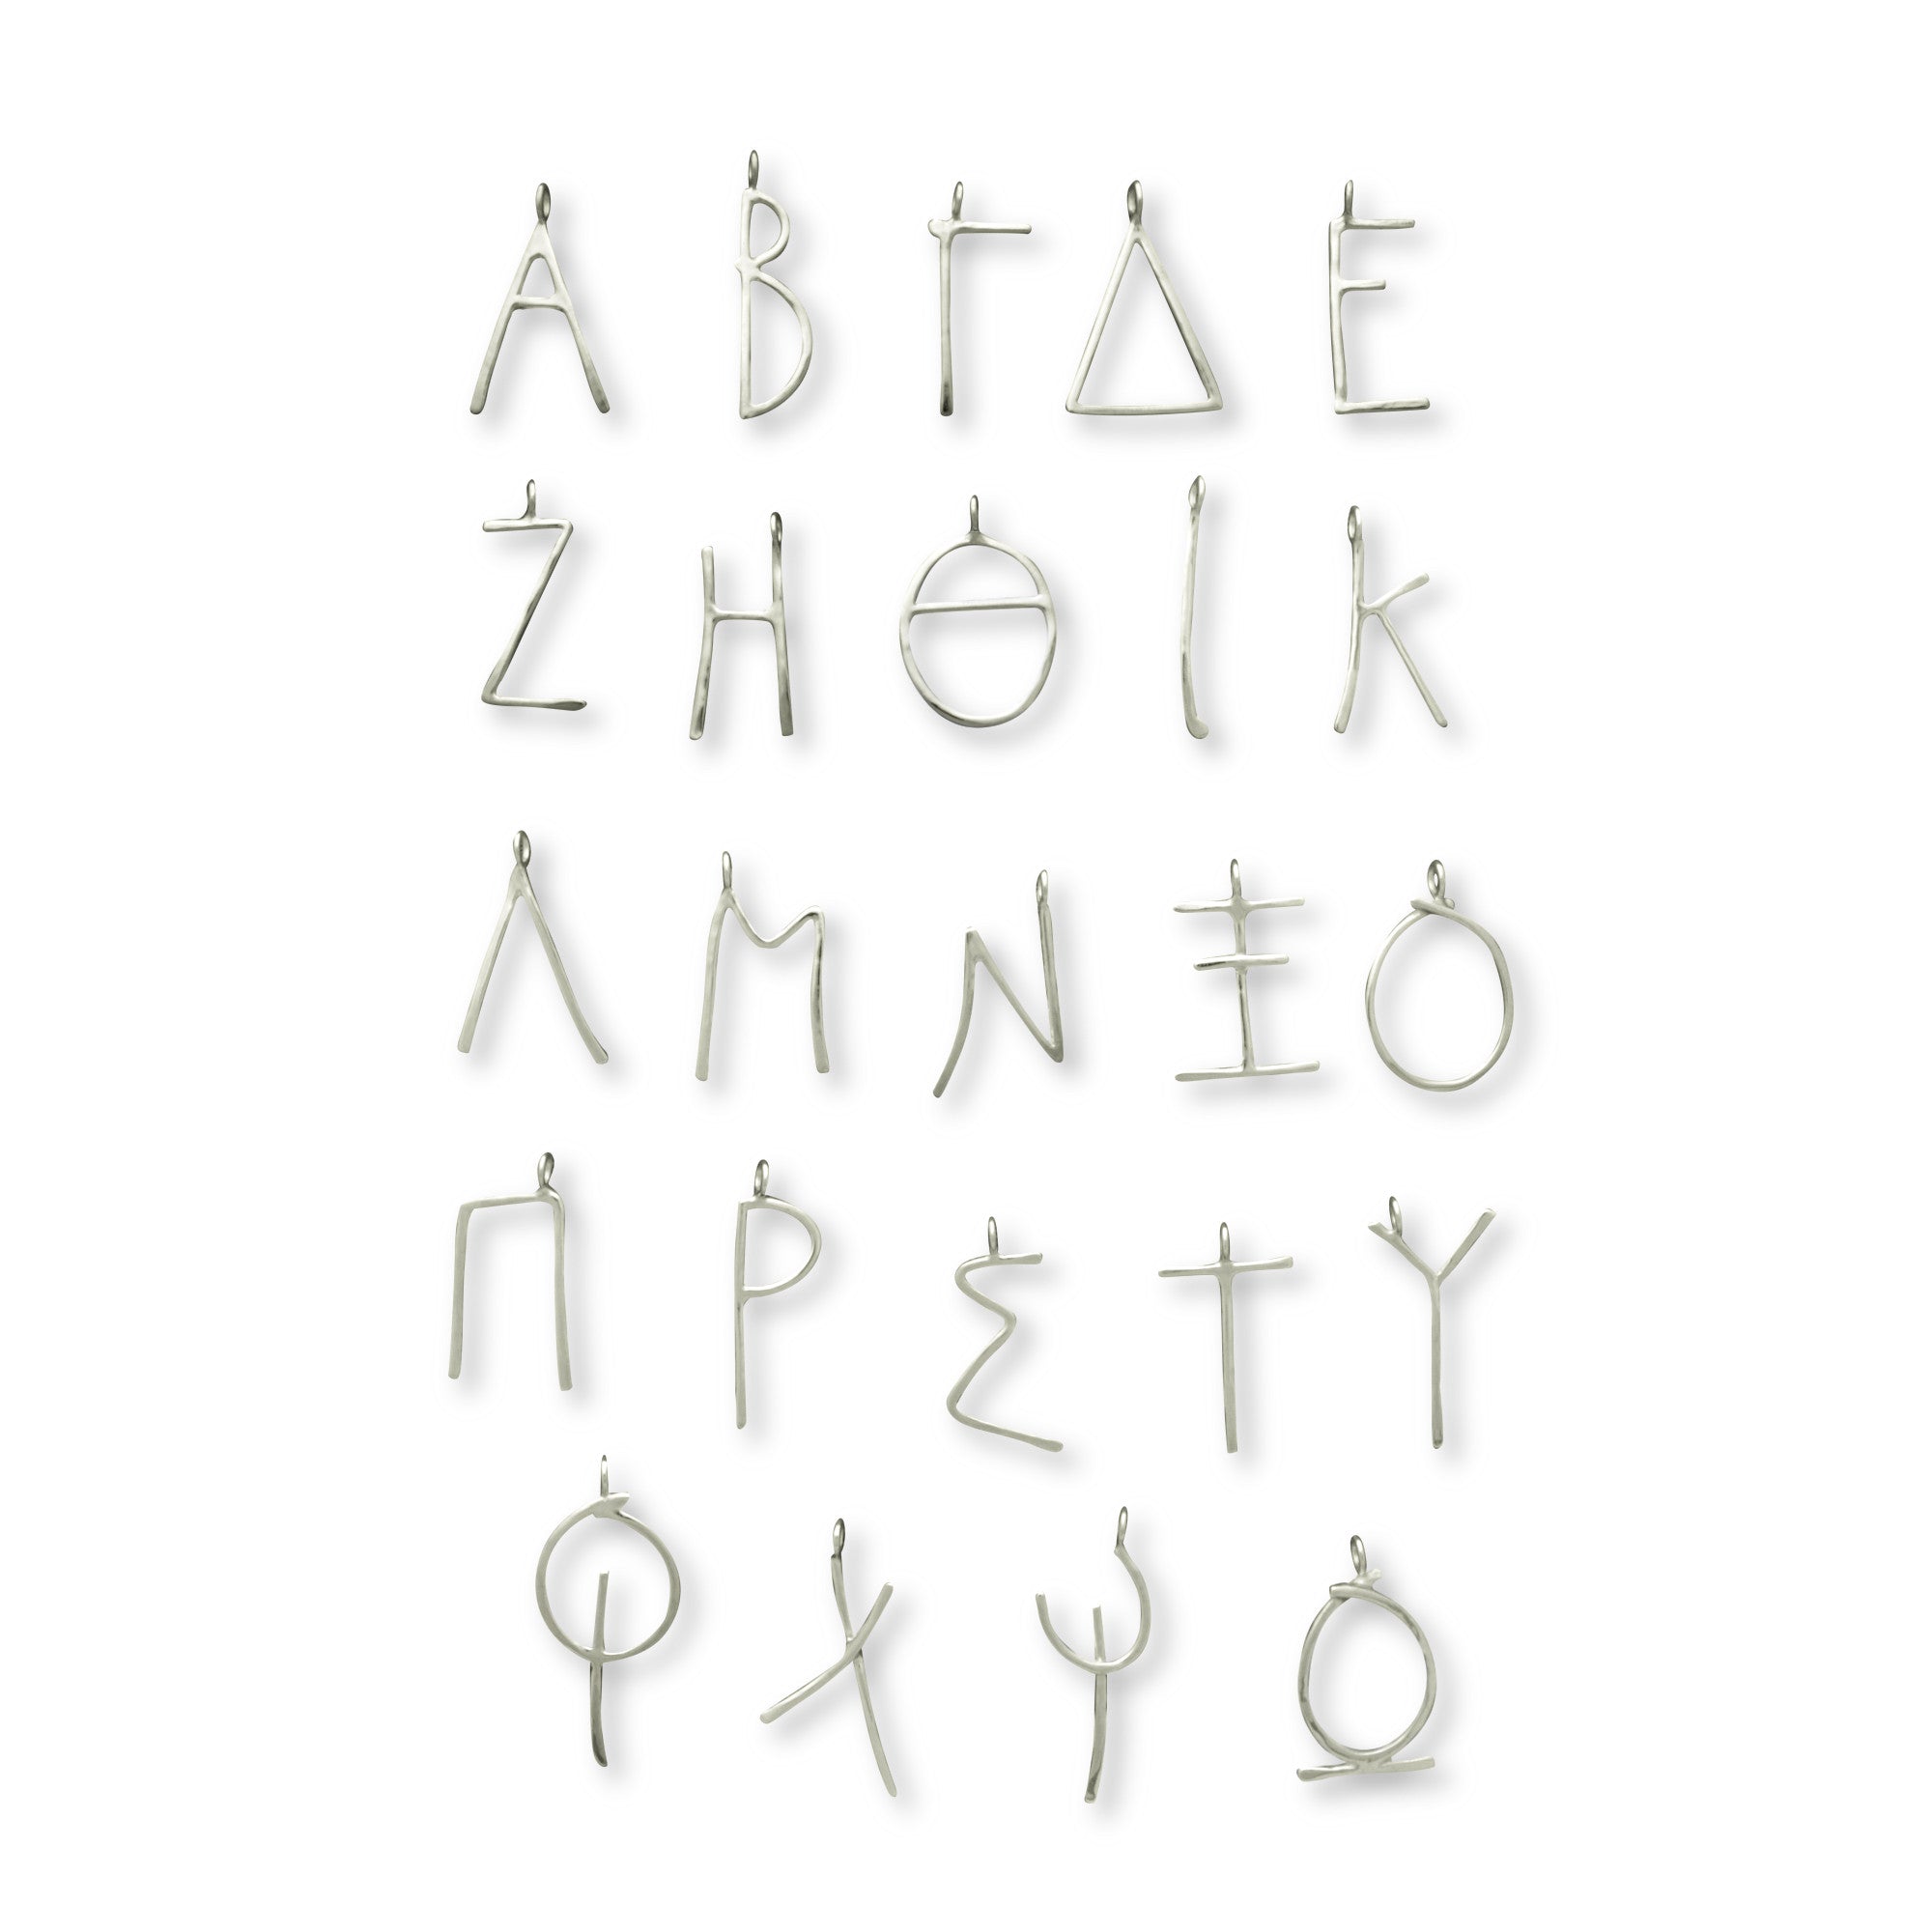 Alphabet Χειροποίητα ασημένια γράμματα σε αλυσίδα No1